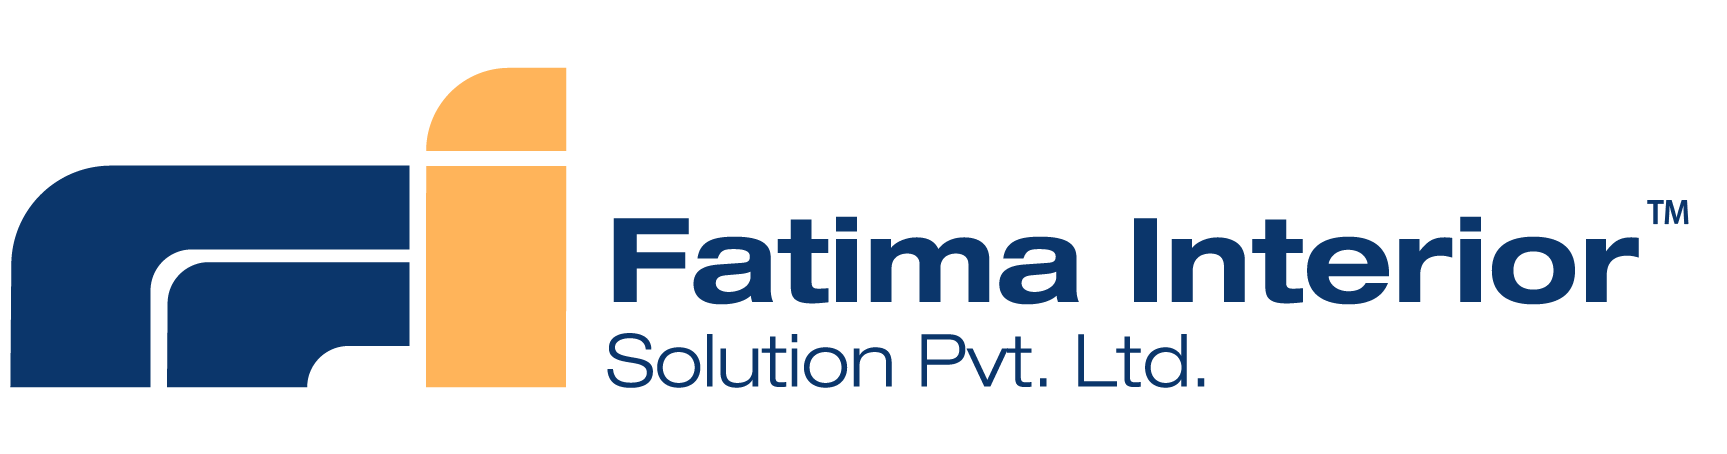 Fatima Interior Solution